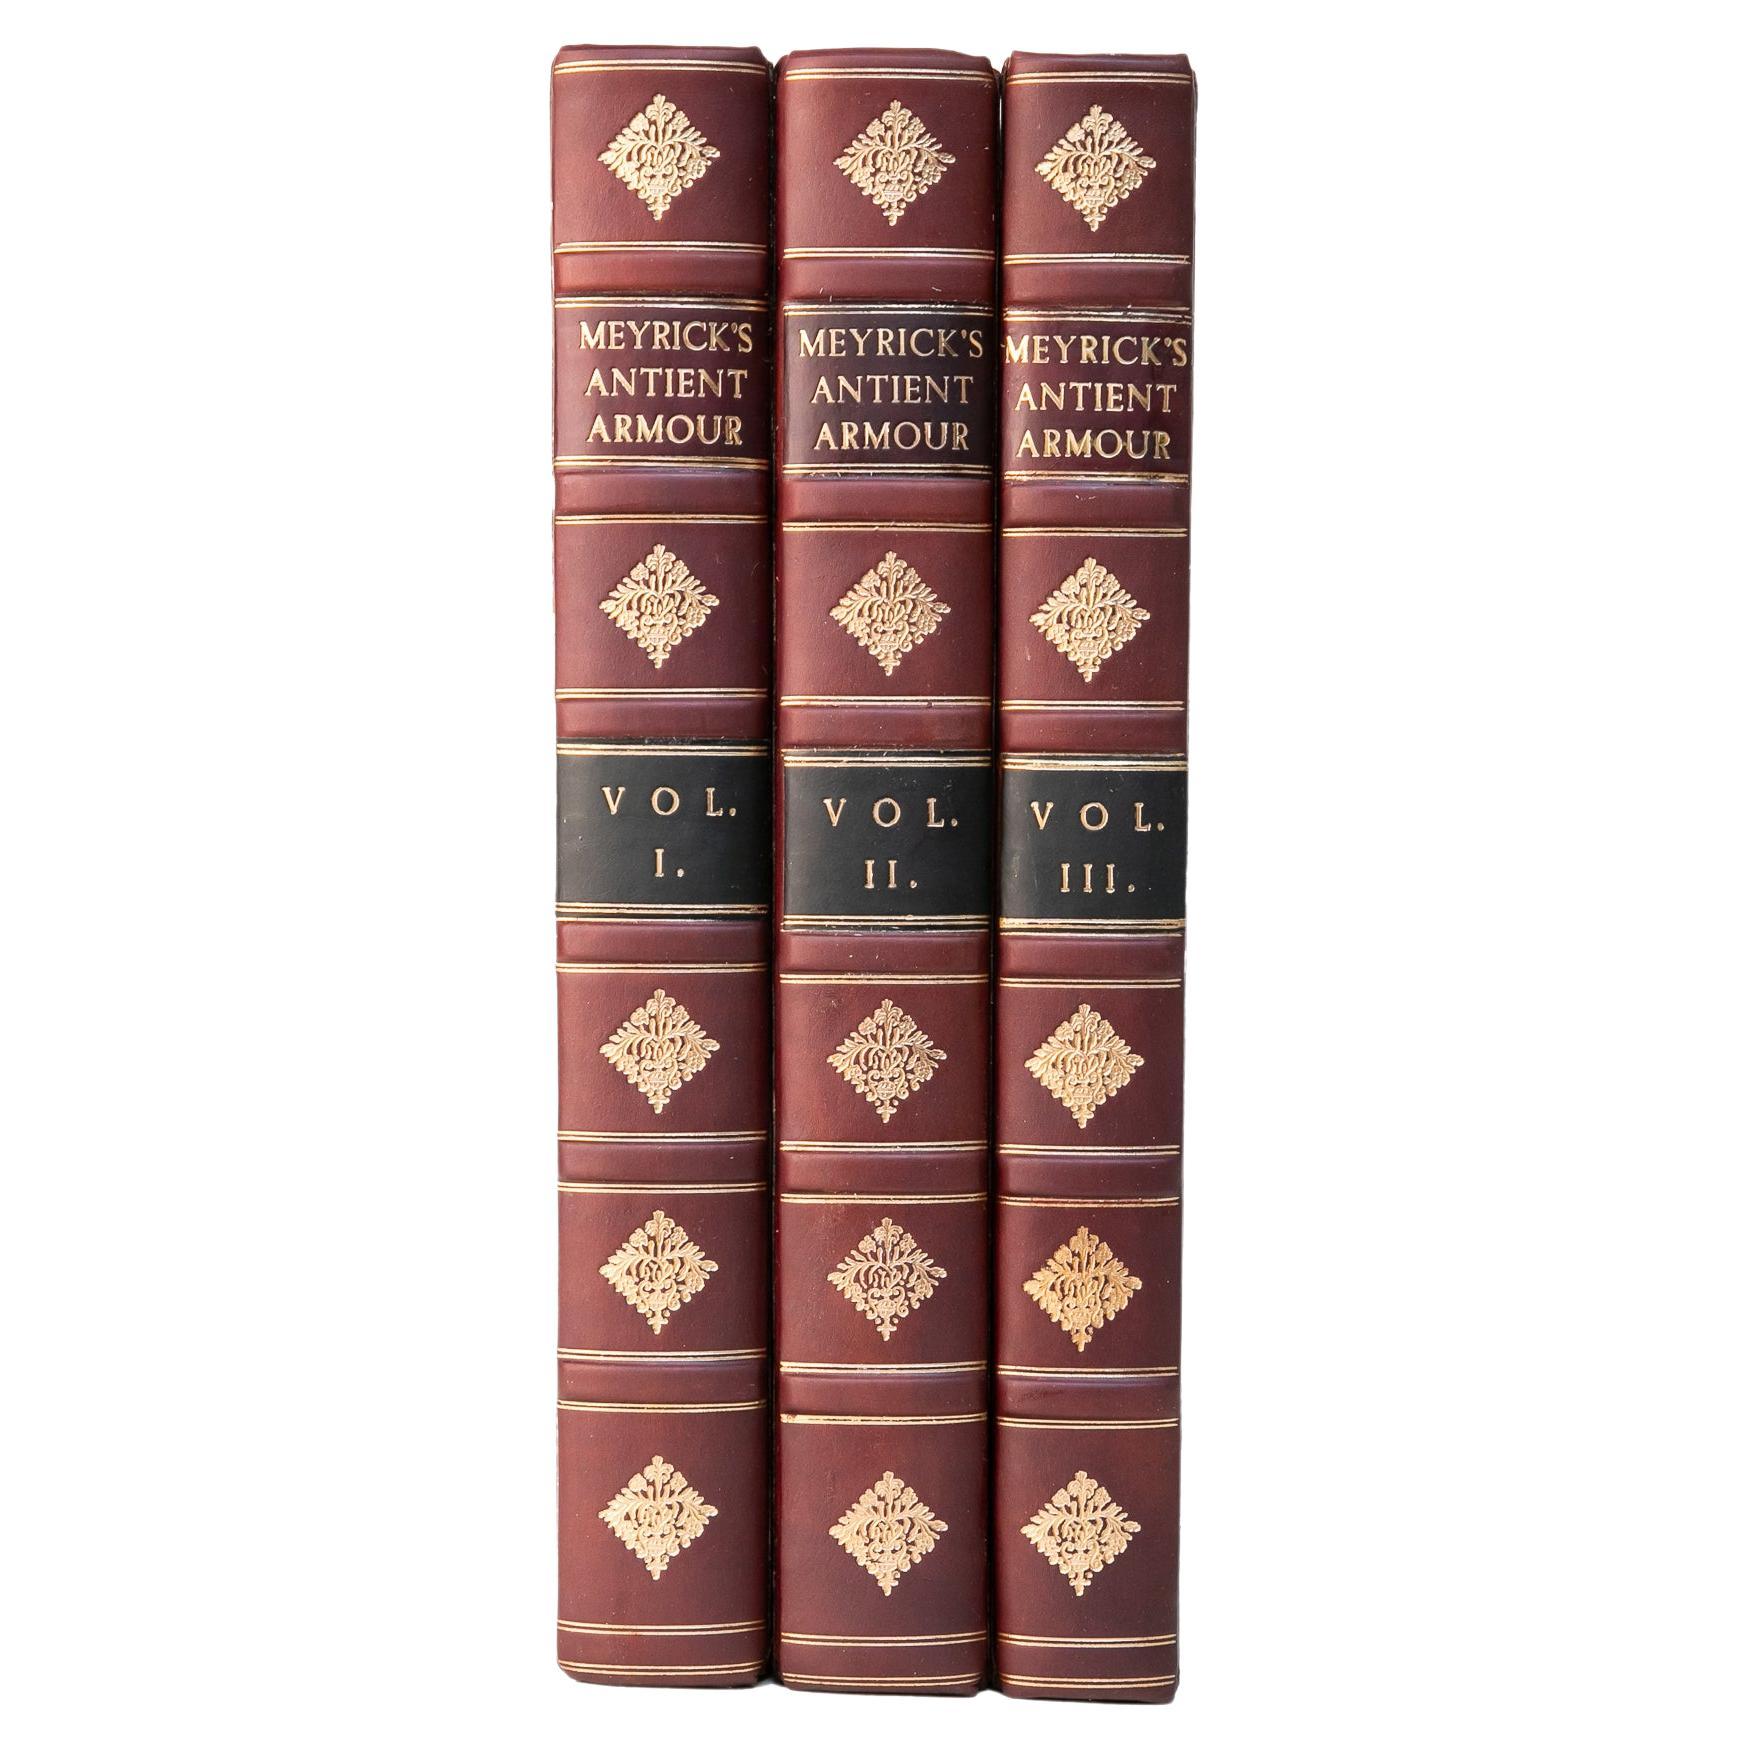 3 Volumes. Samuel Rush Meyrick, Ancient Armour. For Sale